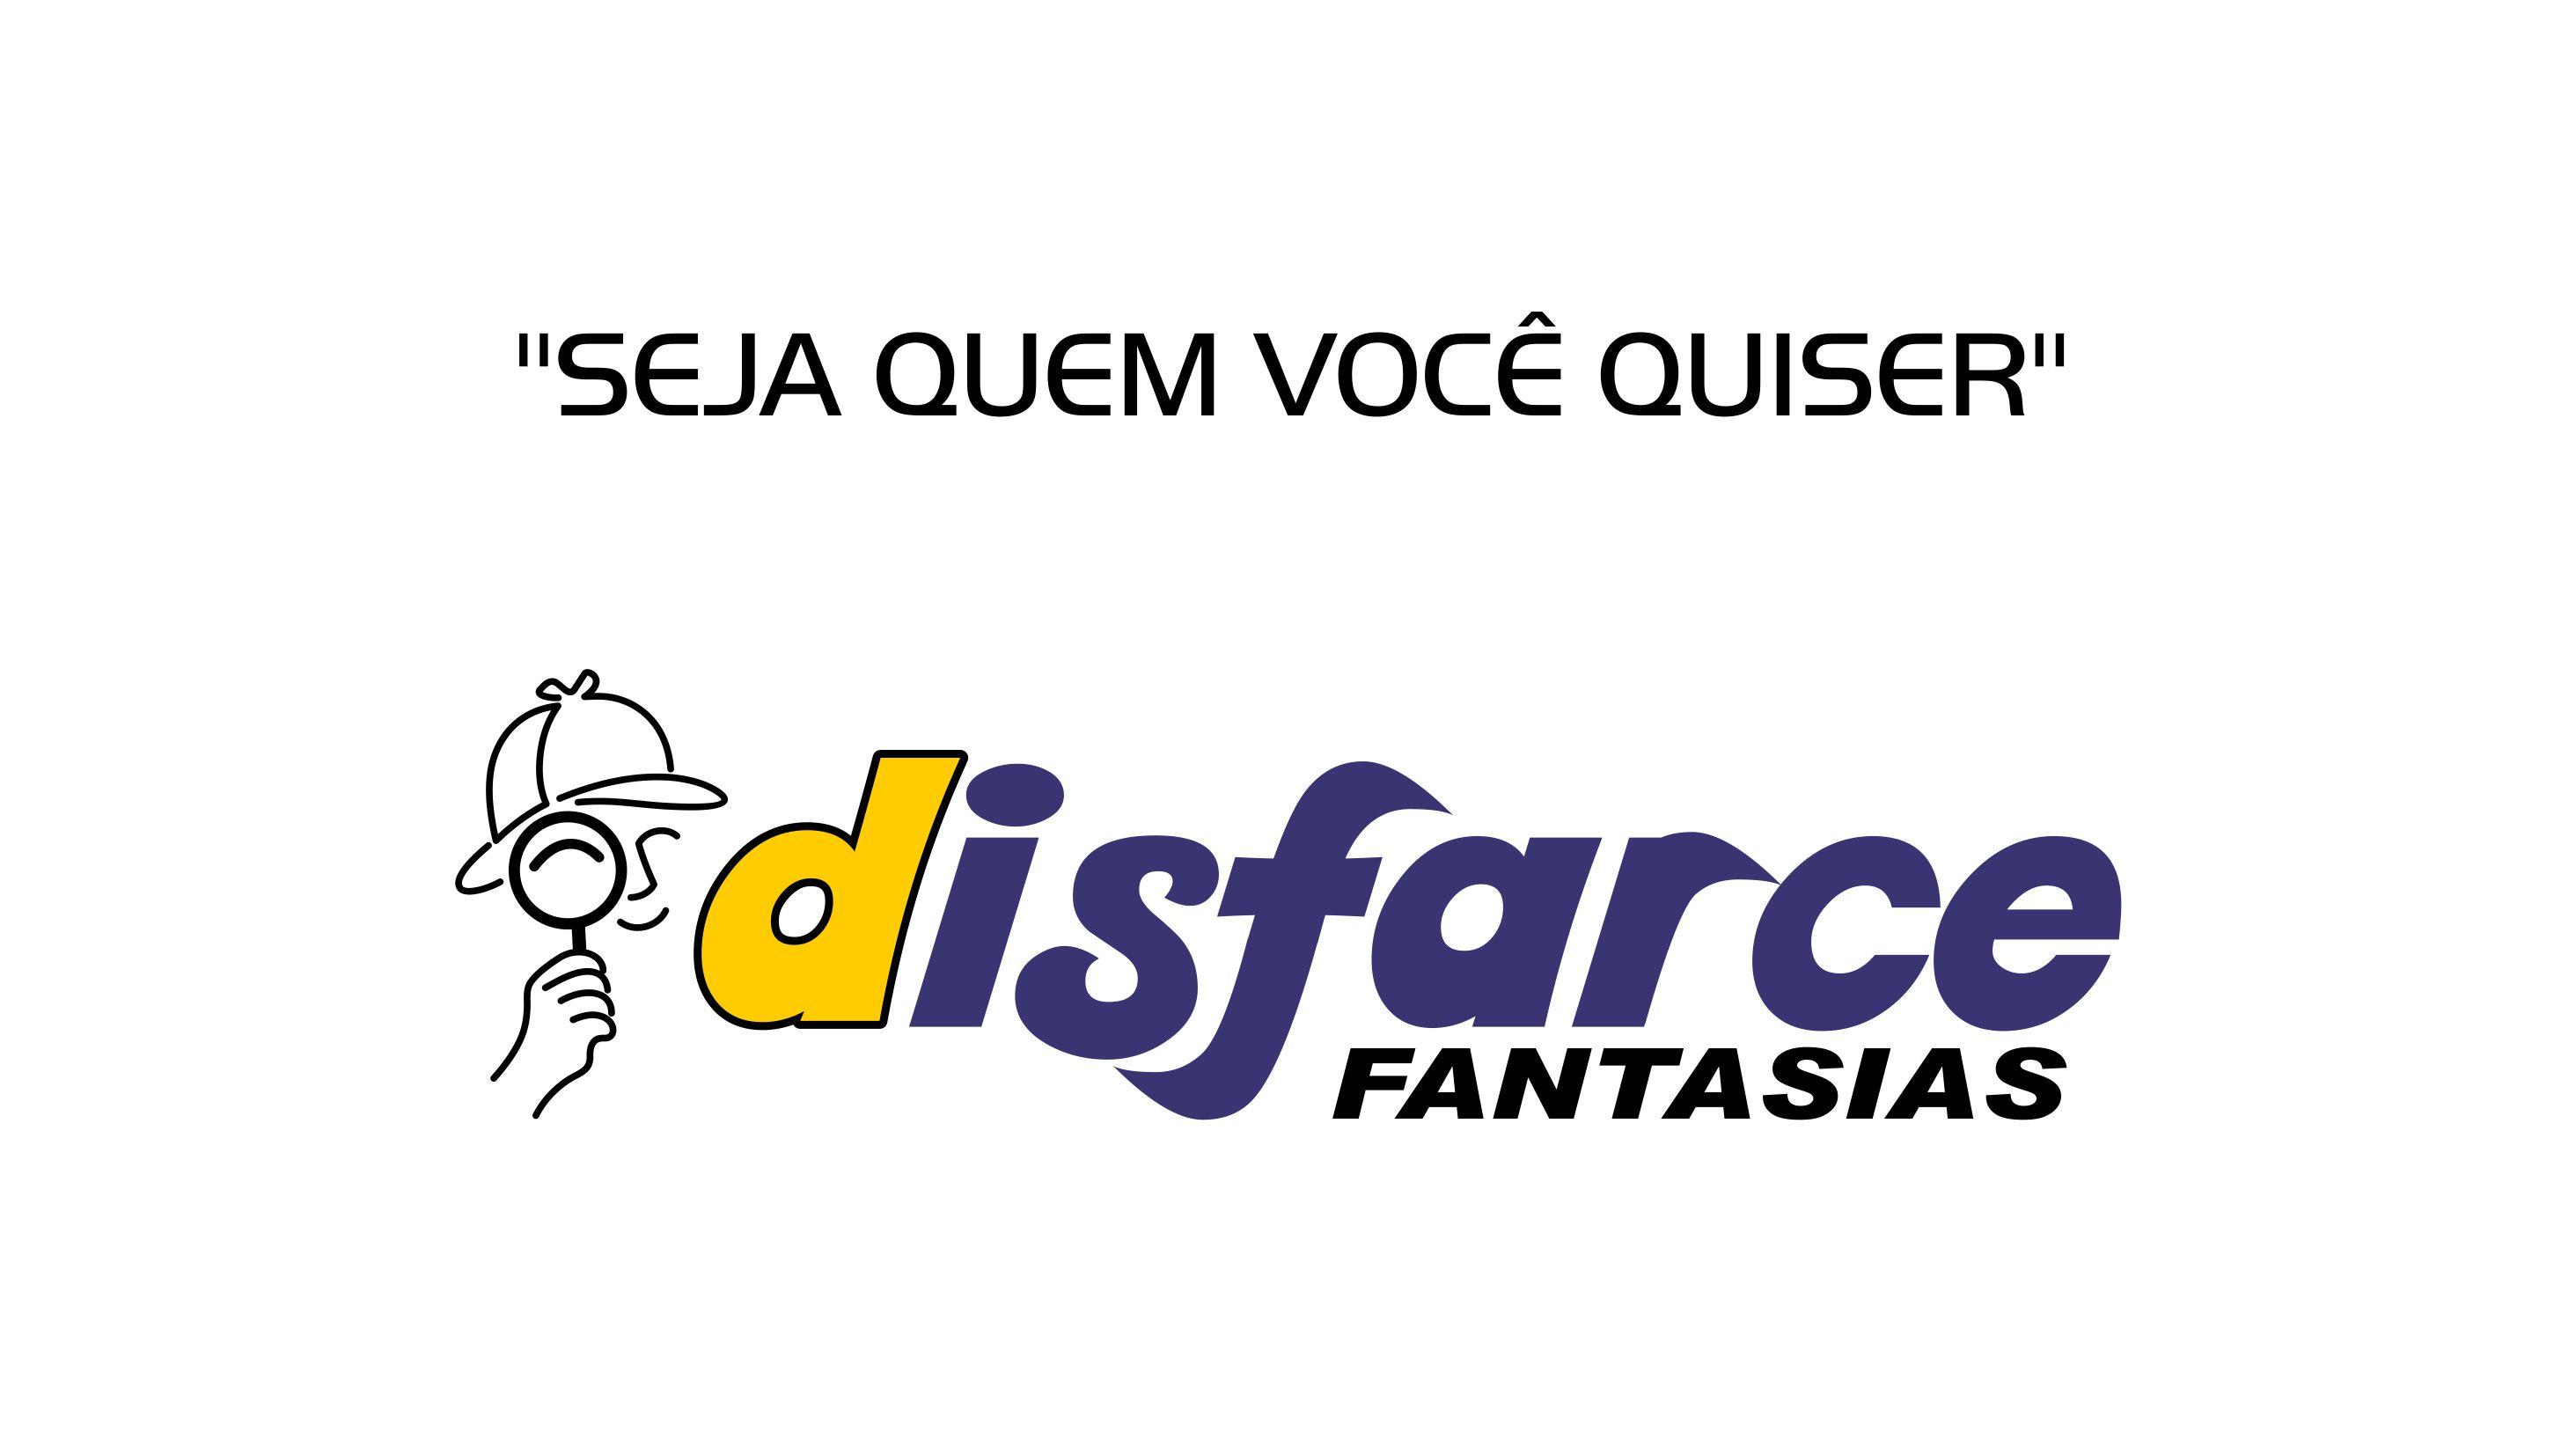 DISFARCE FANTASIAS logo